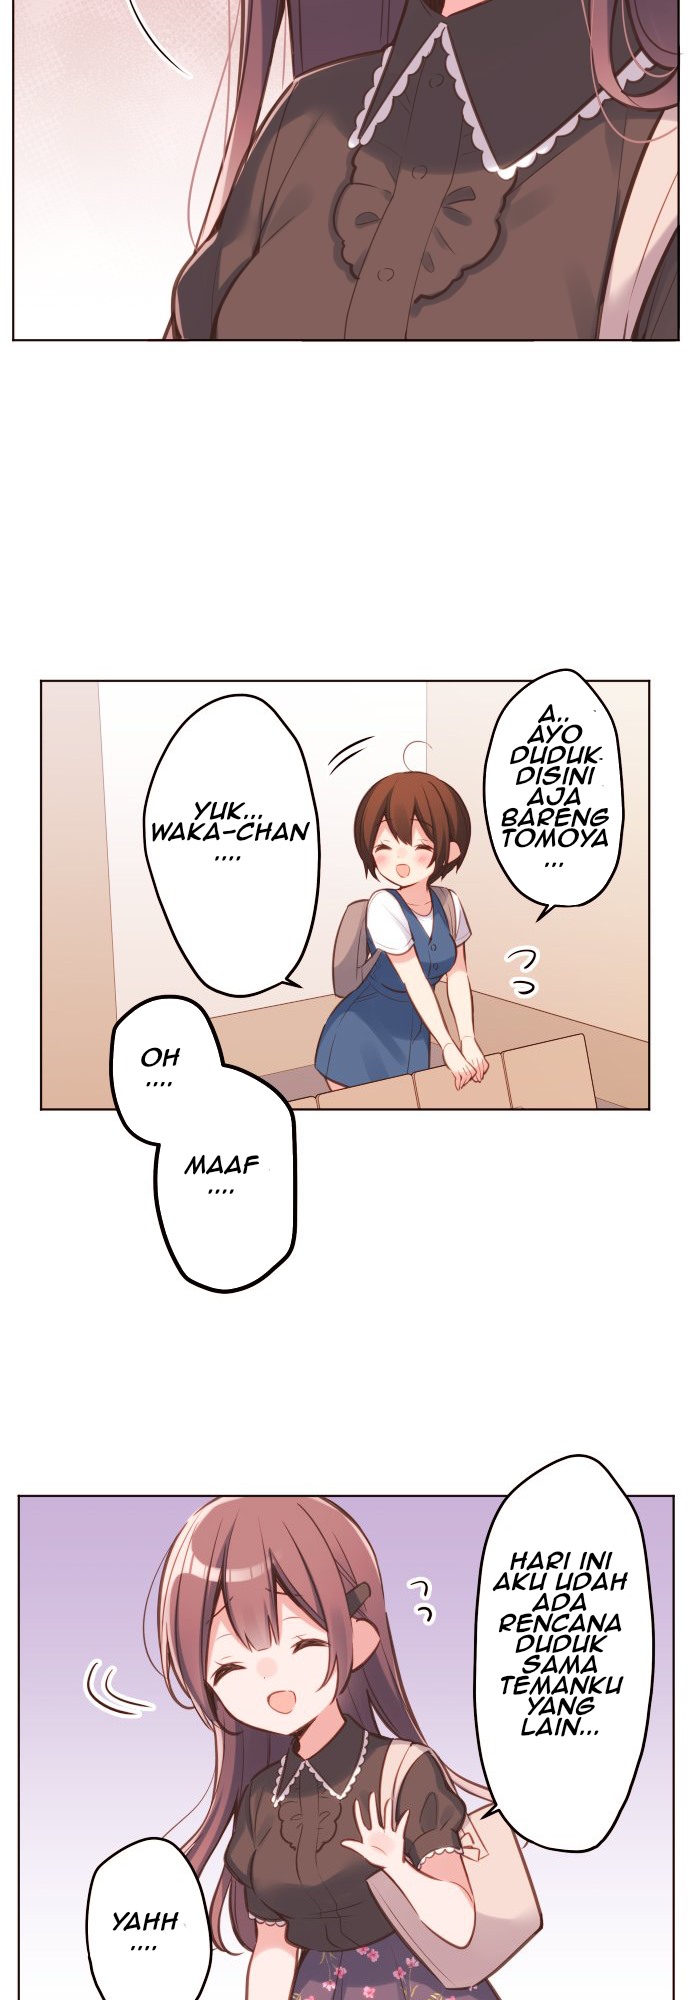 Waka-chan Is Flirty Again Chapter 31 19